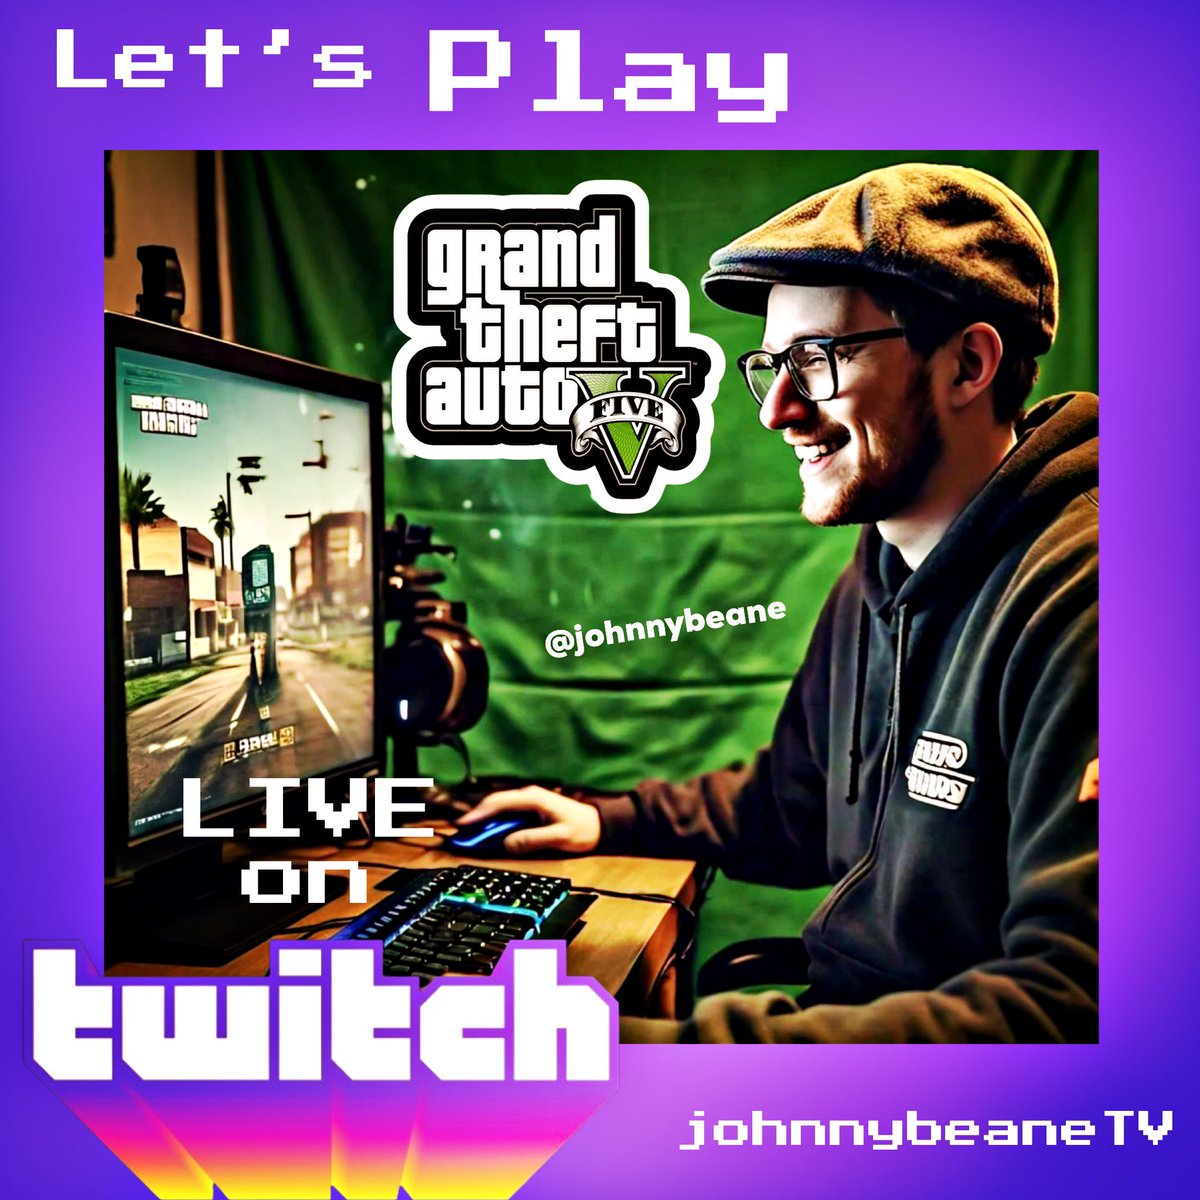 Join us on Twitch for GTAV LIVE! 👉twitch.tv/Johnnybeane 🔴 🎮 #TwitchAffiliate #TwitchStreamer #Twitch #johnnybeaneTV #GTAV #GrandTheftAuto #GTAstreamer #streamerlife #livestream